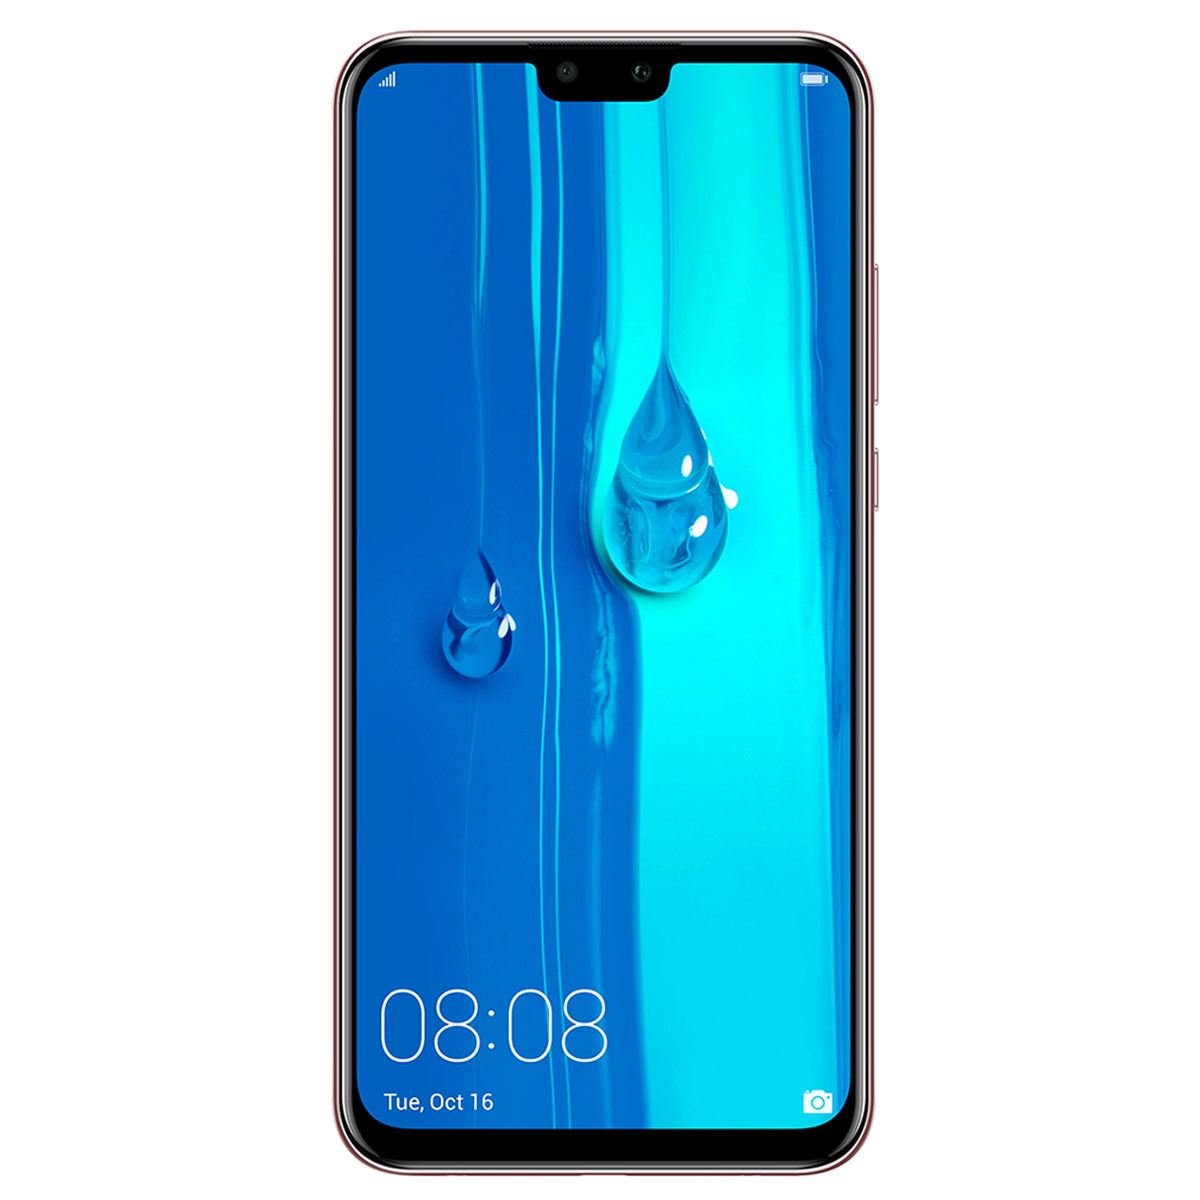 Celular Huawei JKM&#45;LX3 Y9 2019 Color Rosa R9 &#40;Telcel&#41;